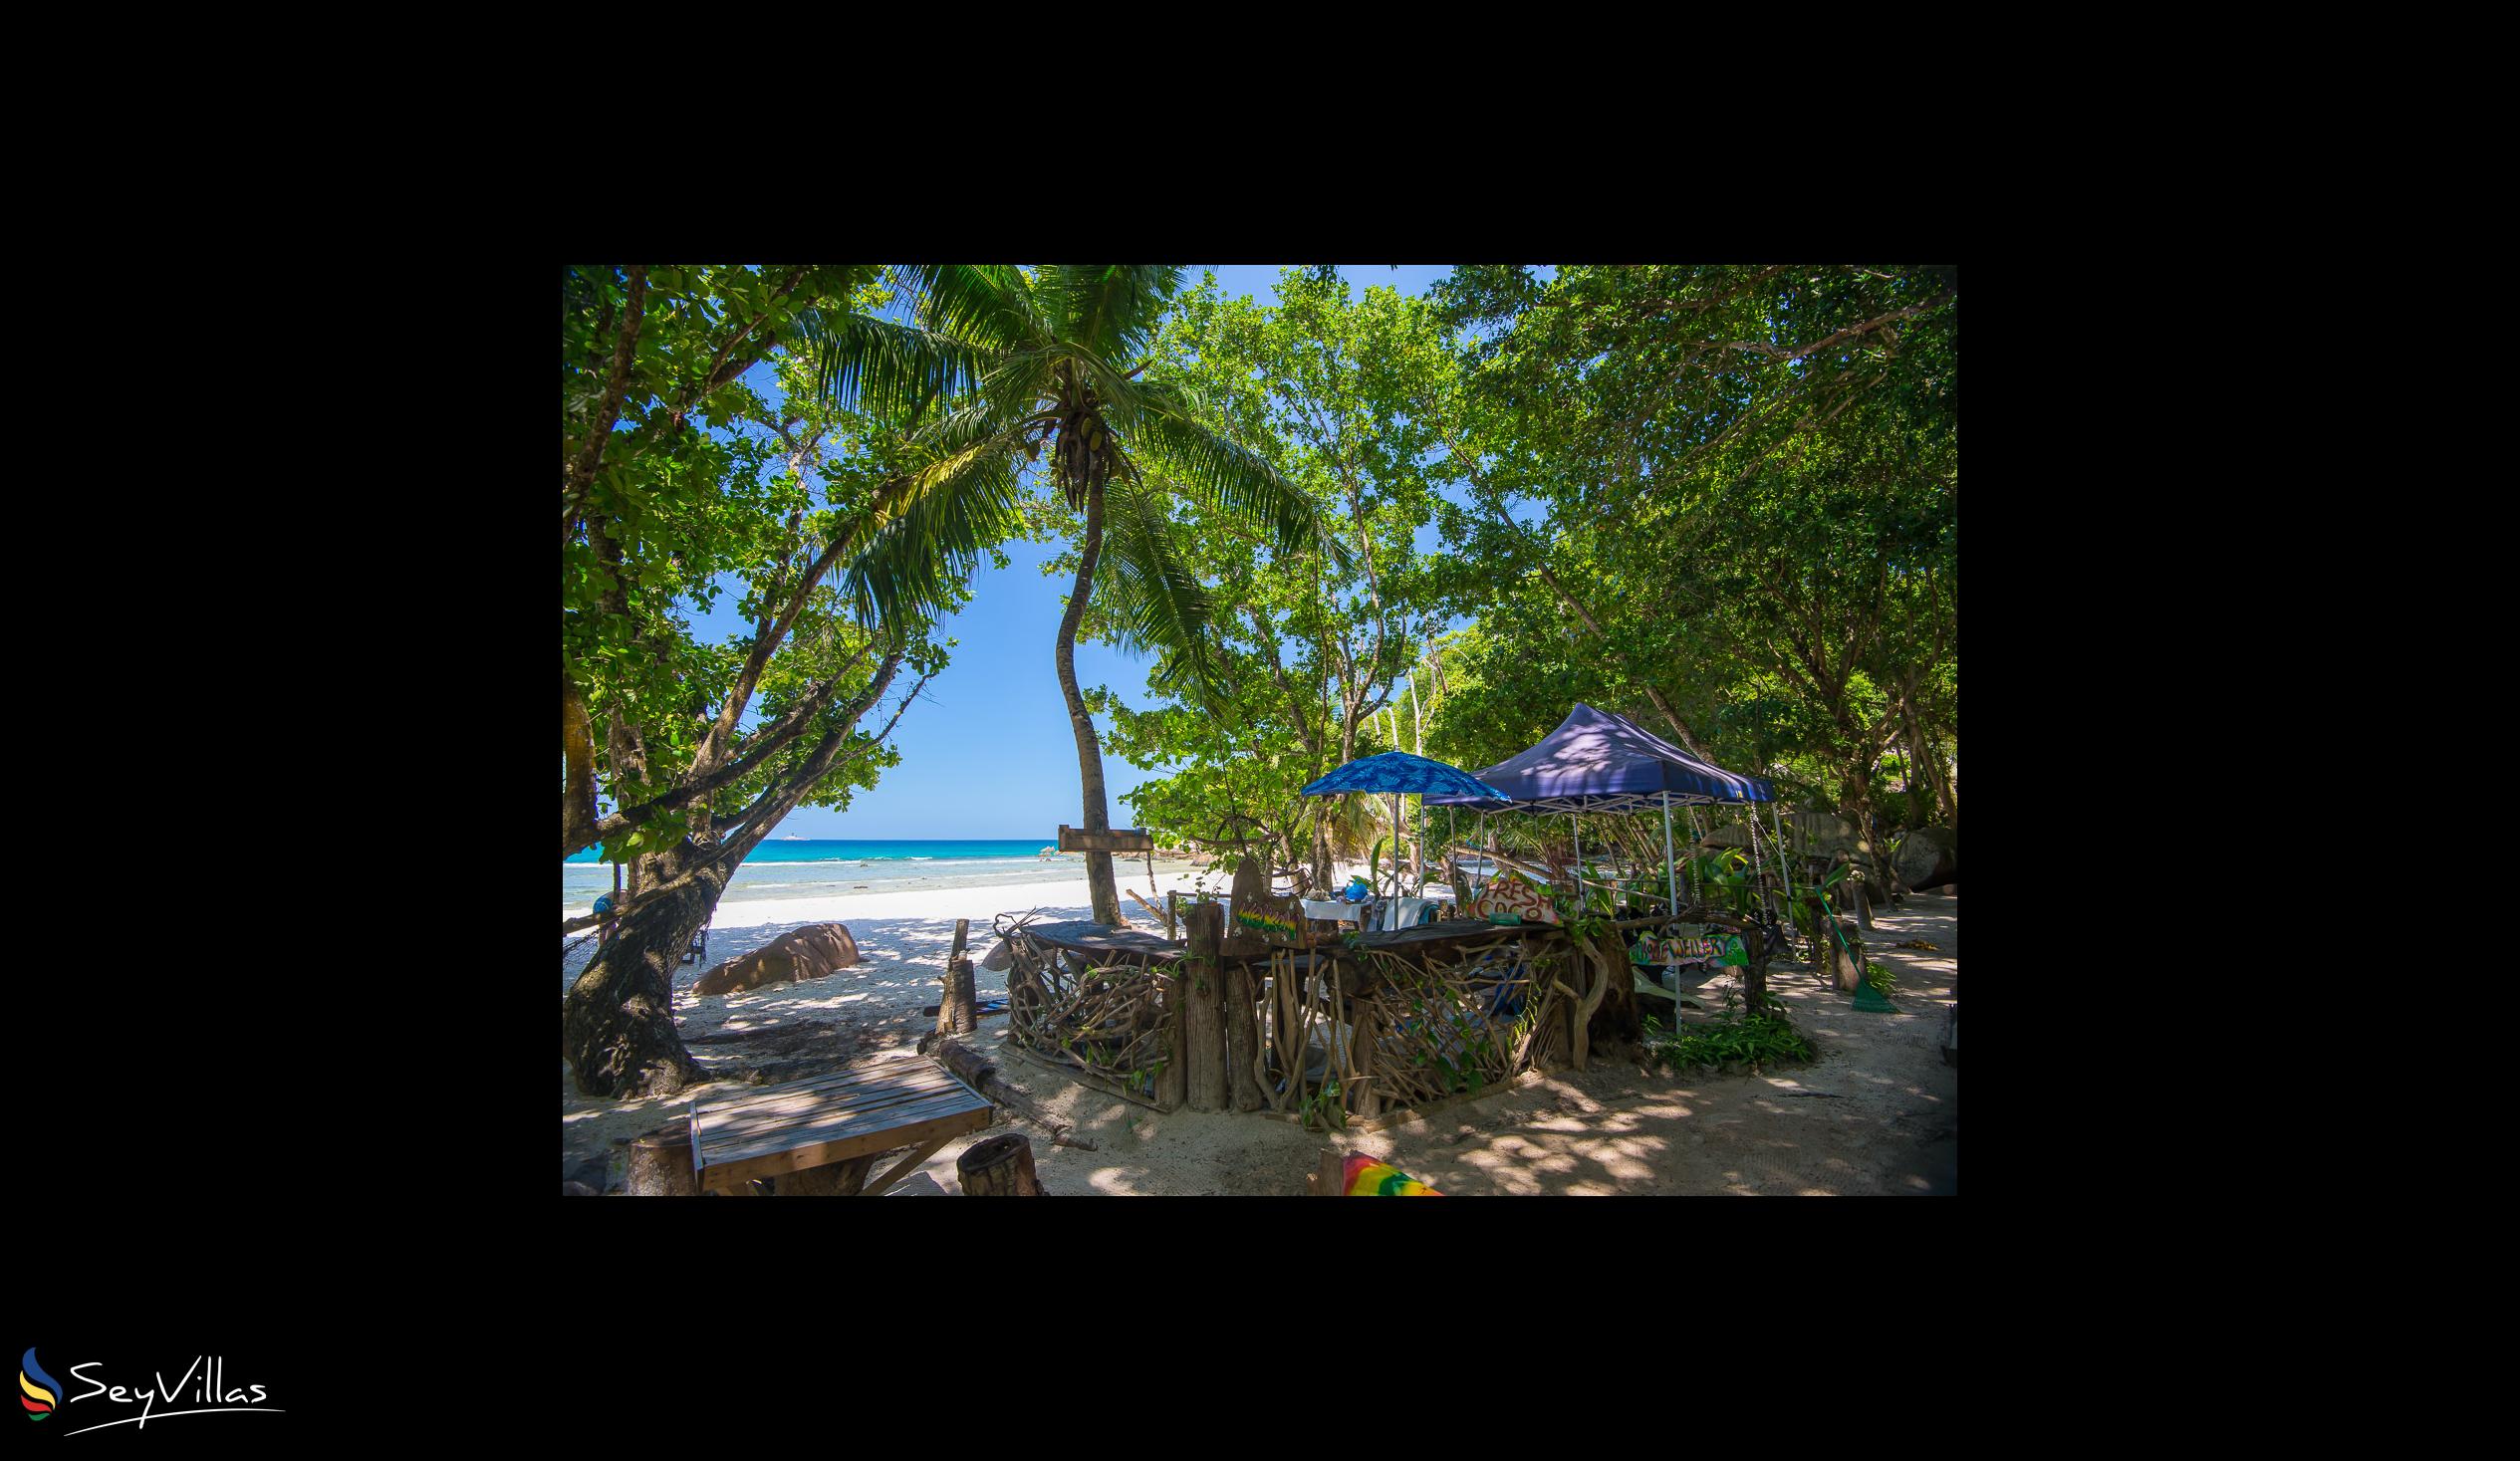 Foto 63: Le Nautique Luxury Waterfront Hotel - Posizione - La Digue (Seychelles)